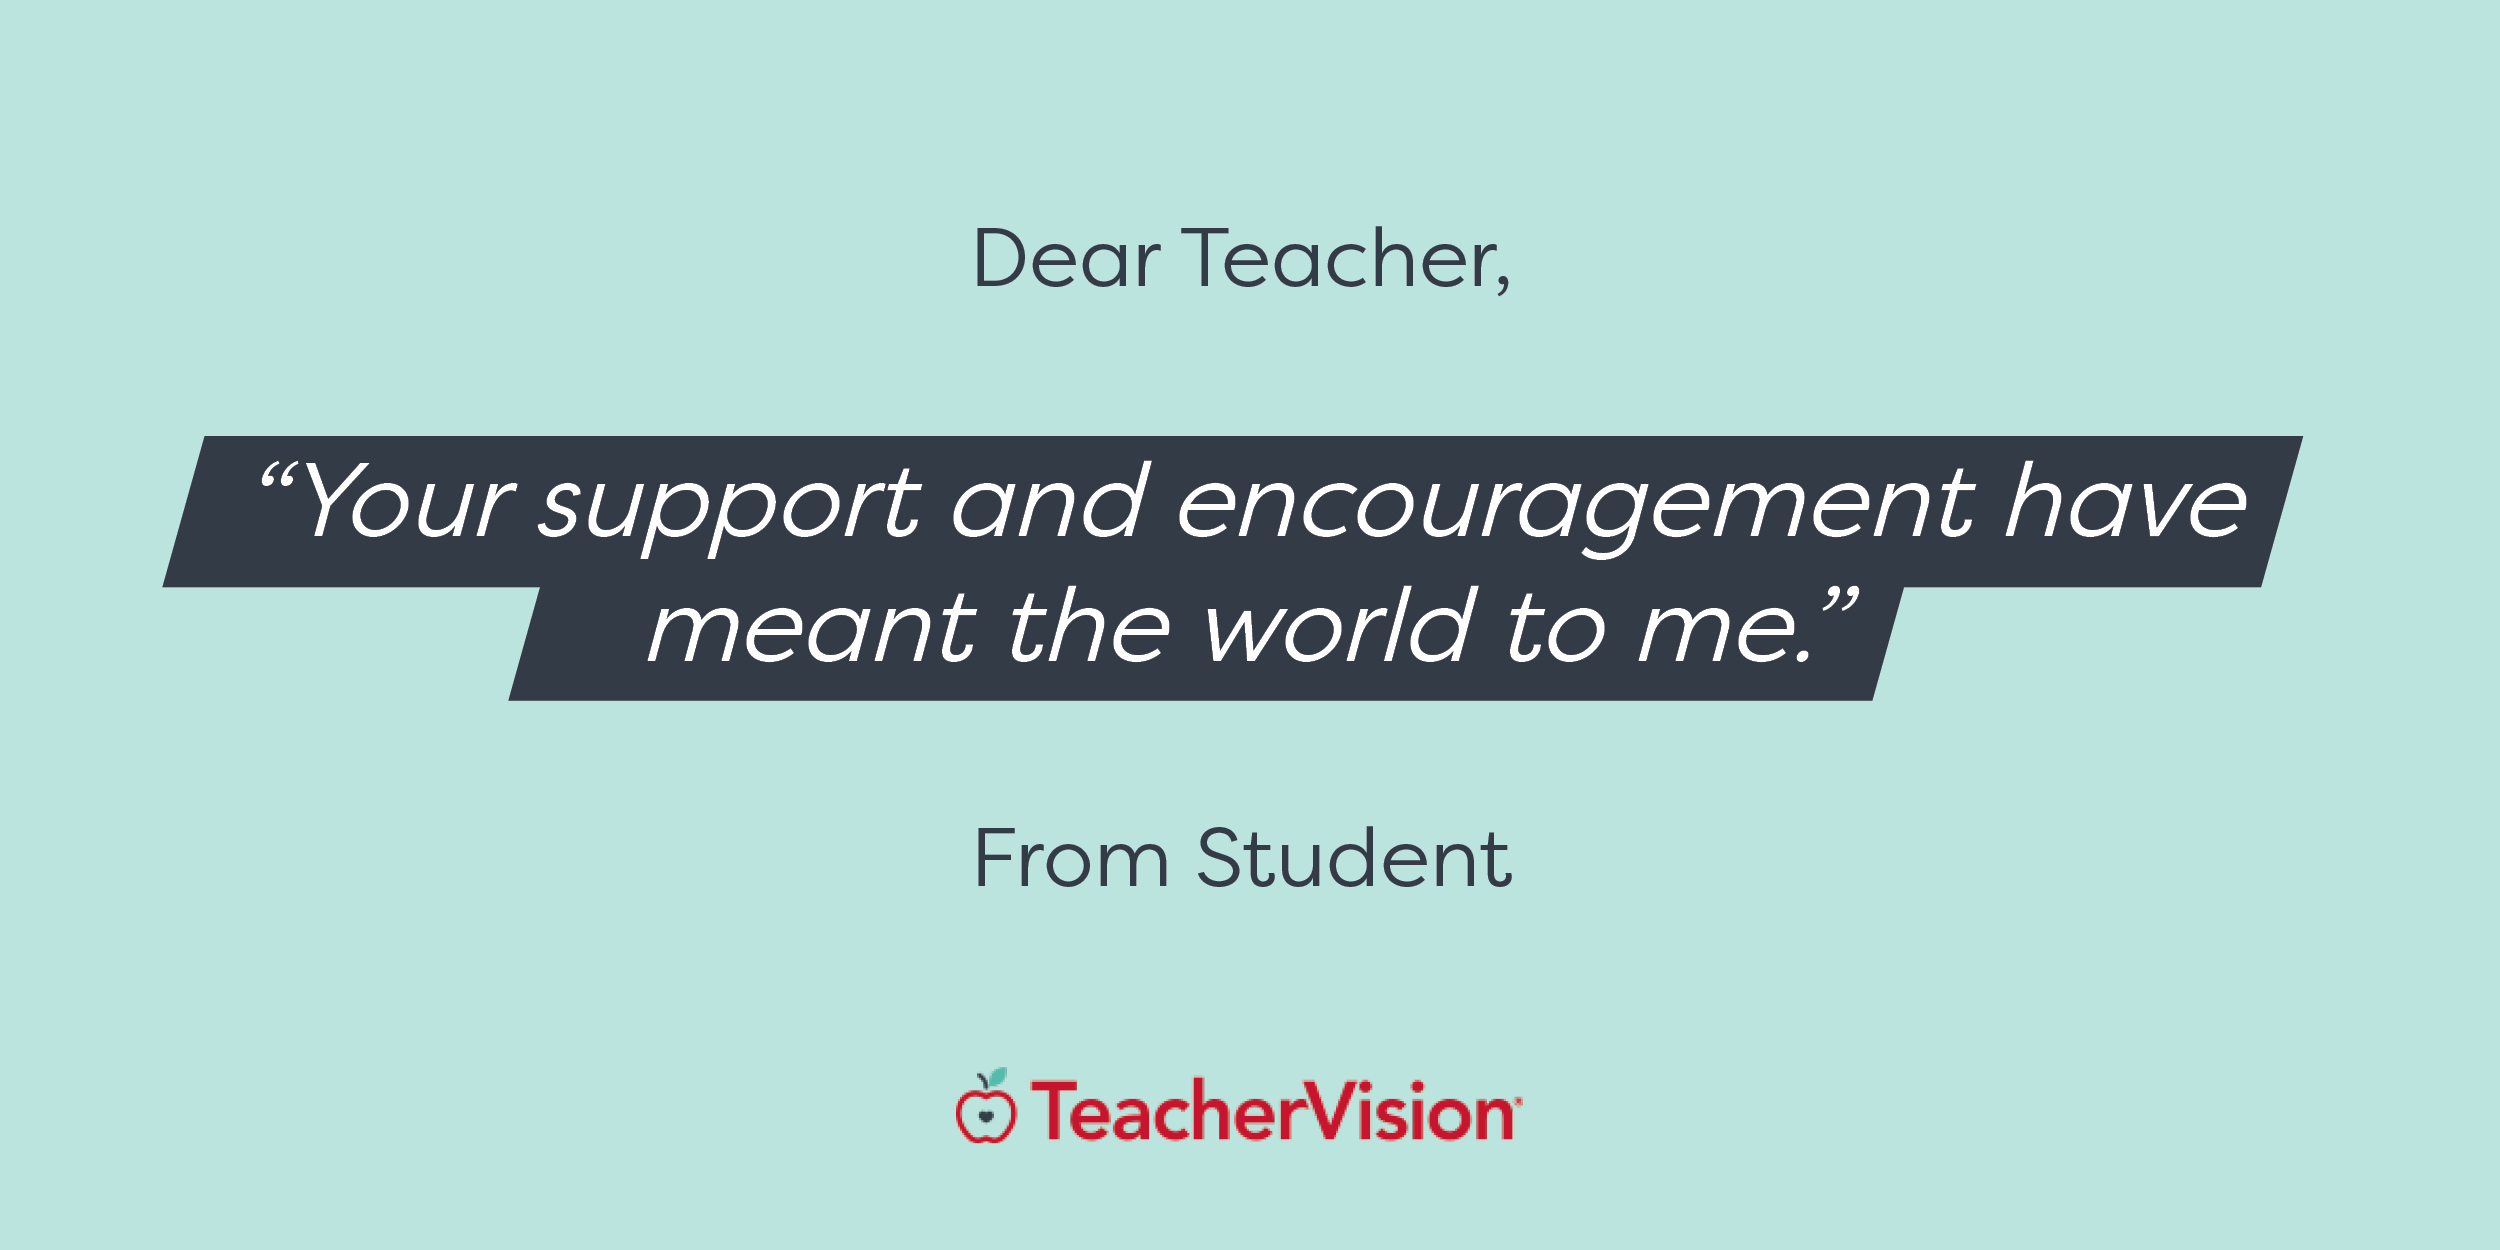 teacher appreciation day quotes